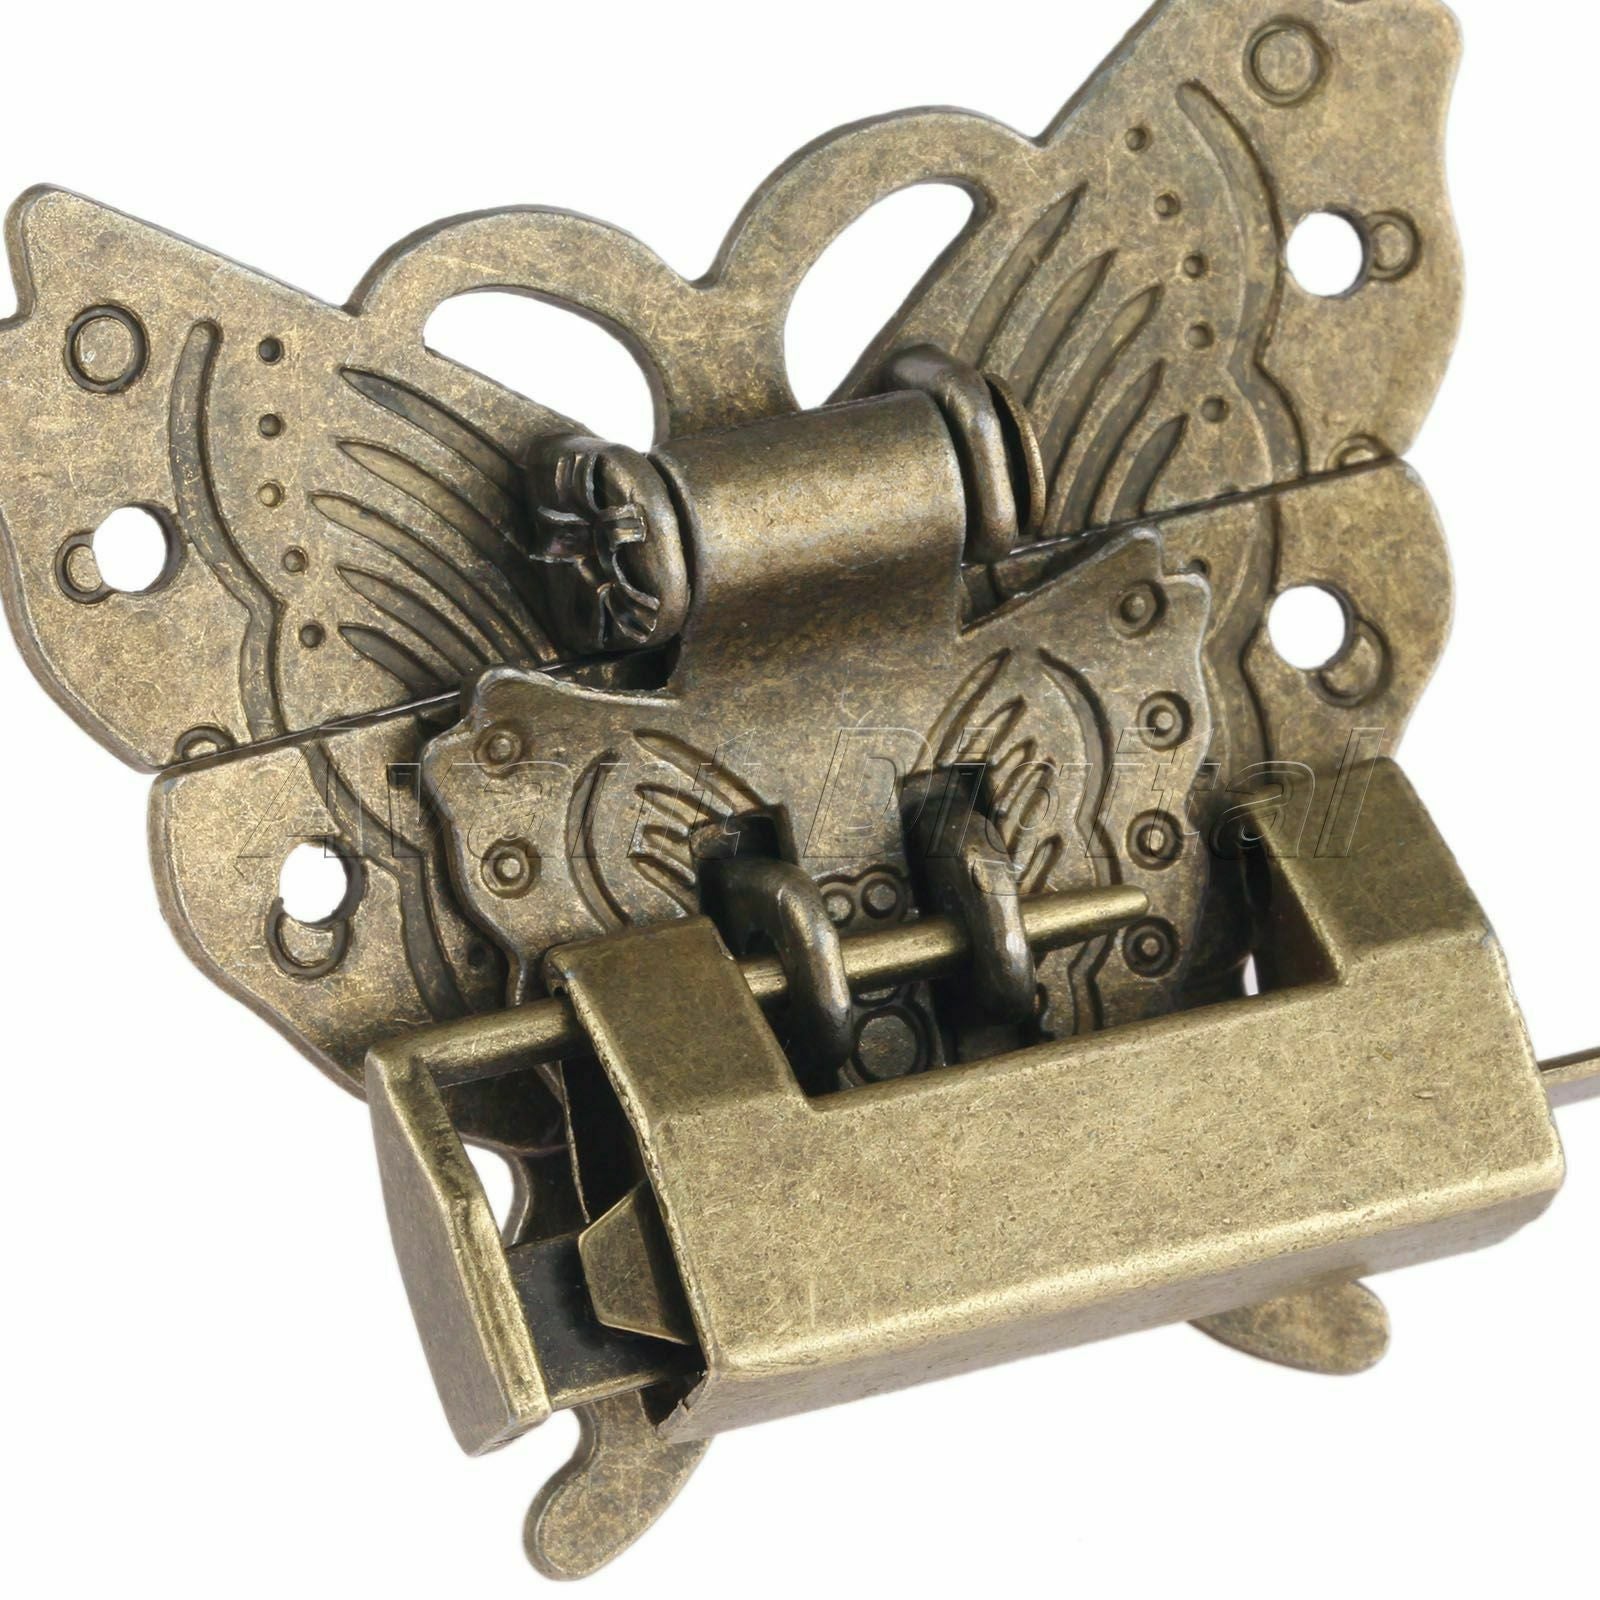 60*38*13mm Chinese Old Padlock Lock Key w/ Butterfly Box Latch Clasp Hardware Se